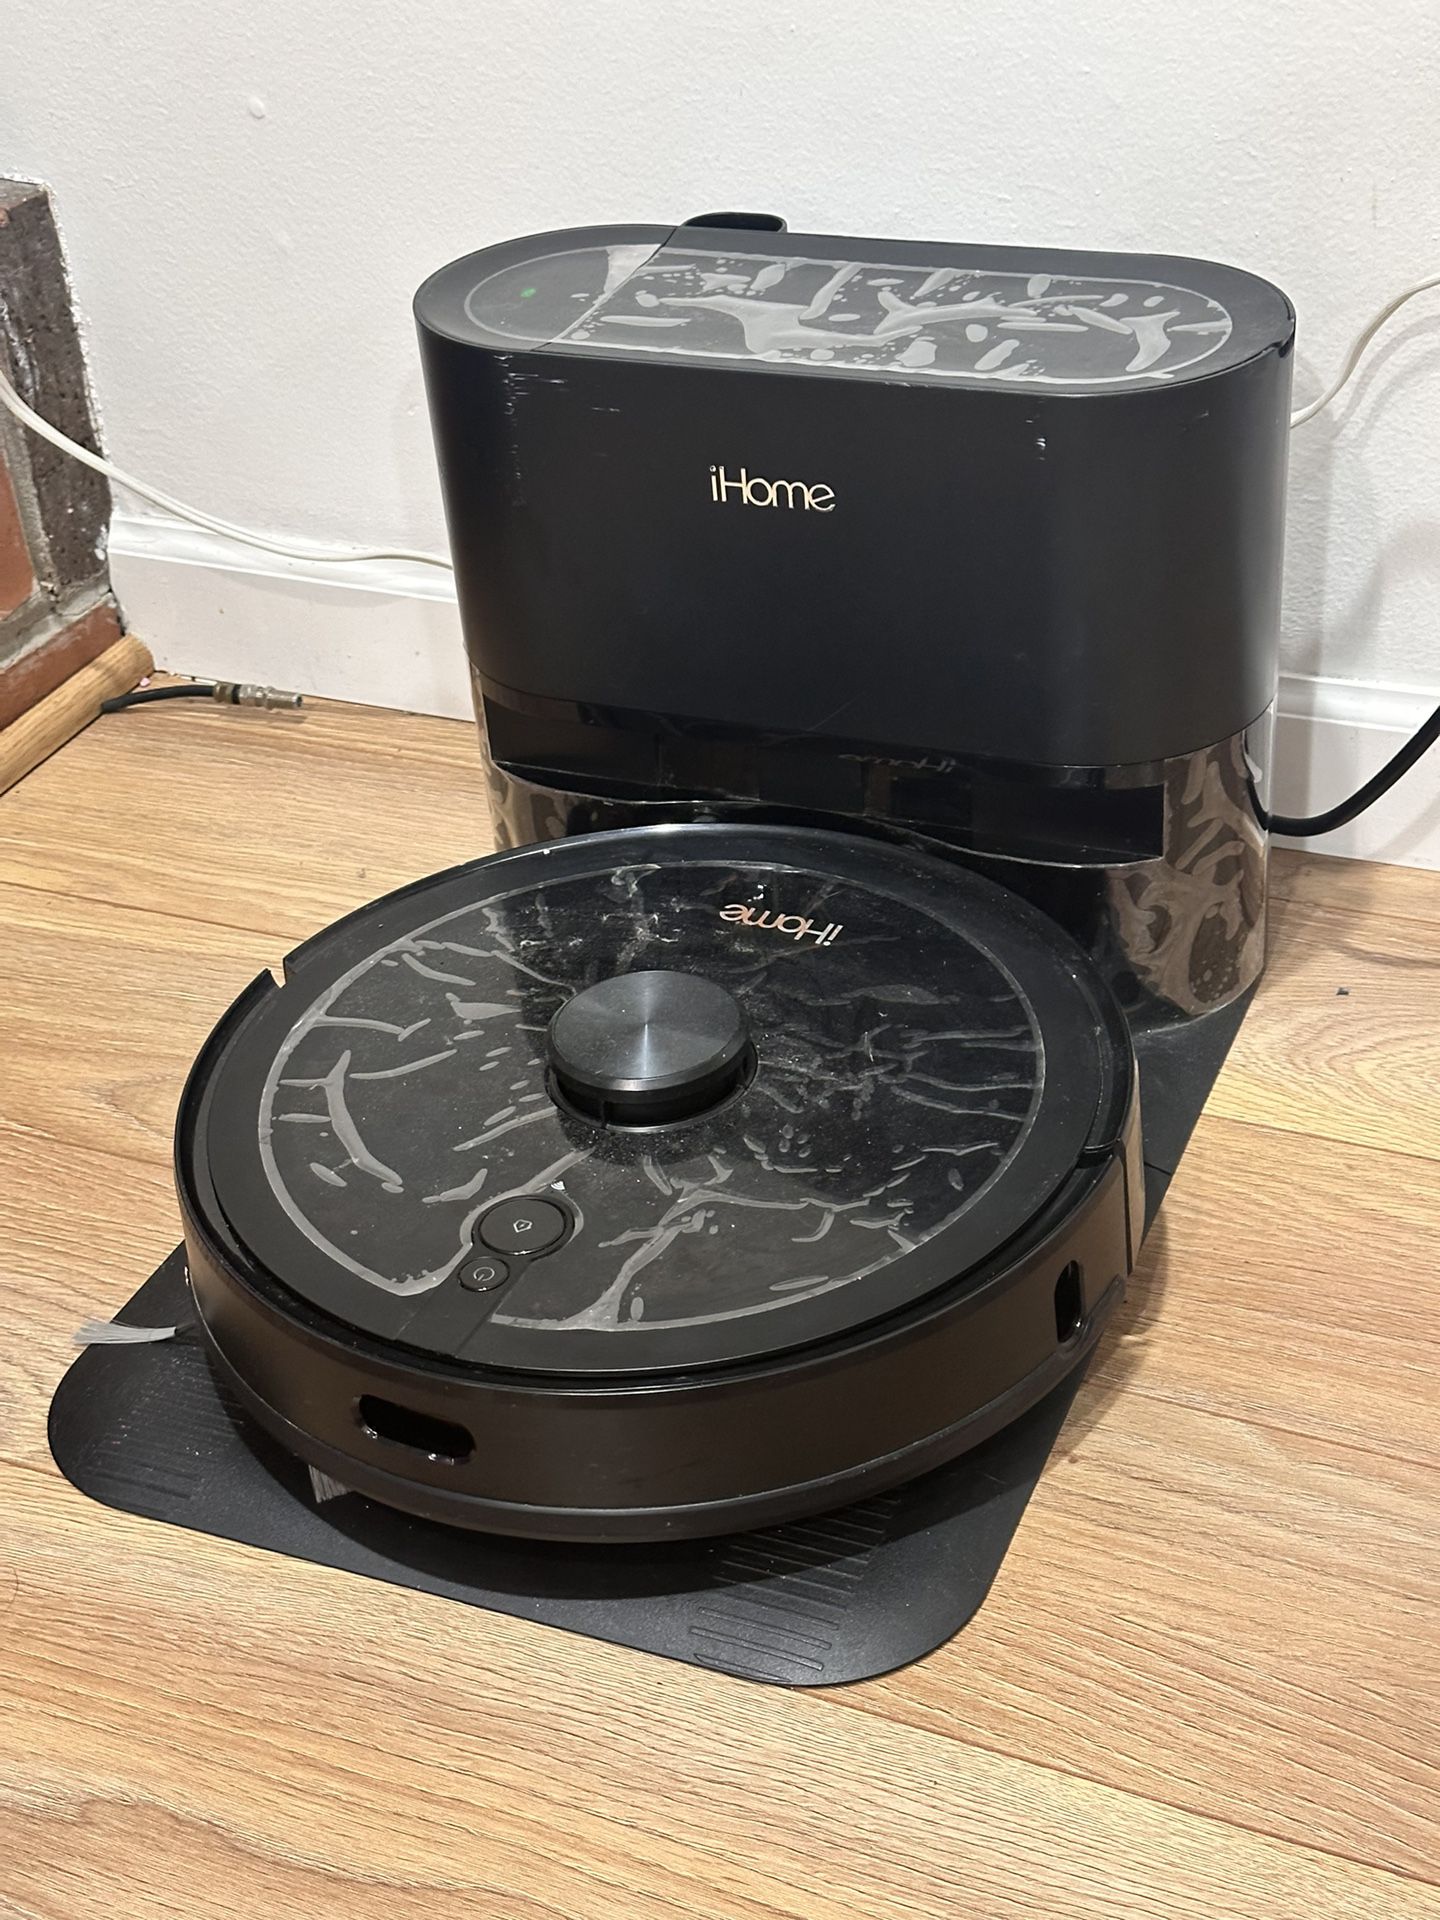 iHome AutoVac Nova Pro 3-in-1 Robot Vacuum And Mop